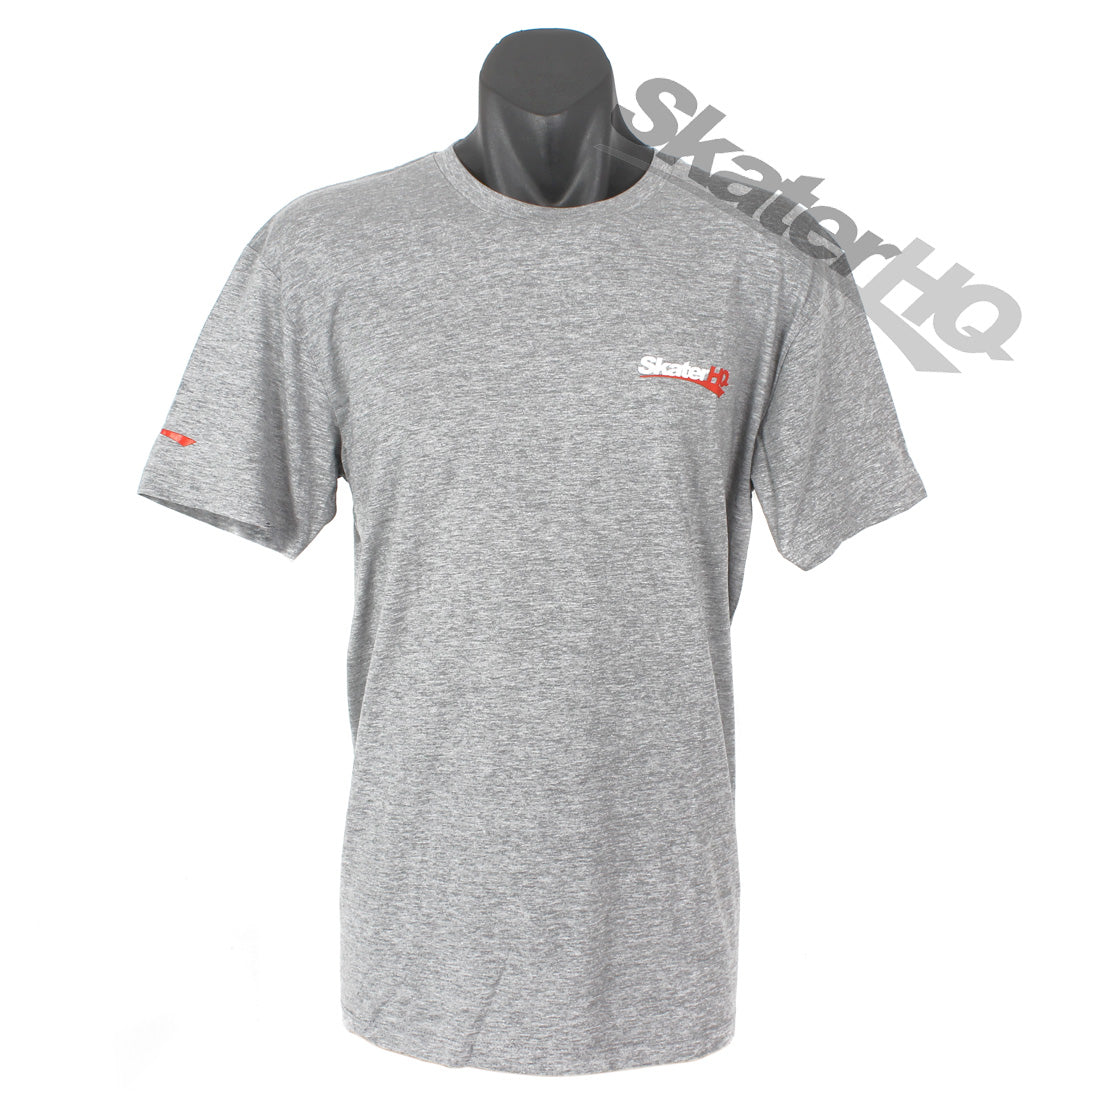 Skater HQ Adult Swoosh T-Shirt - Grey Apparel Skater HQ Clothing